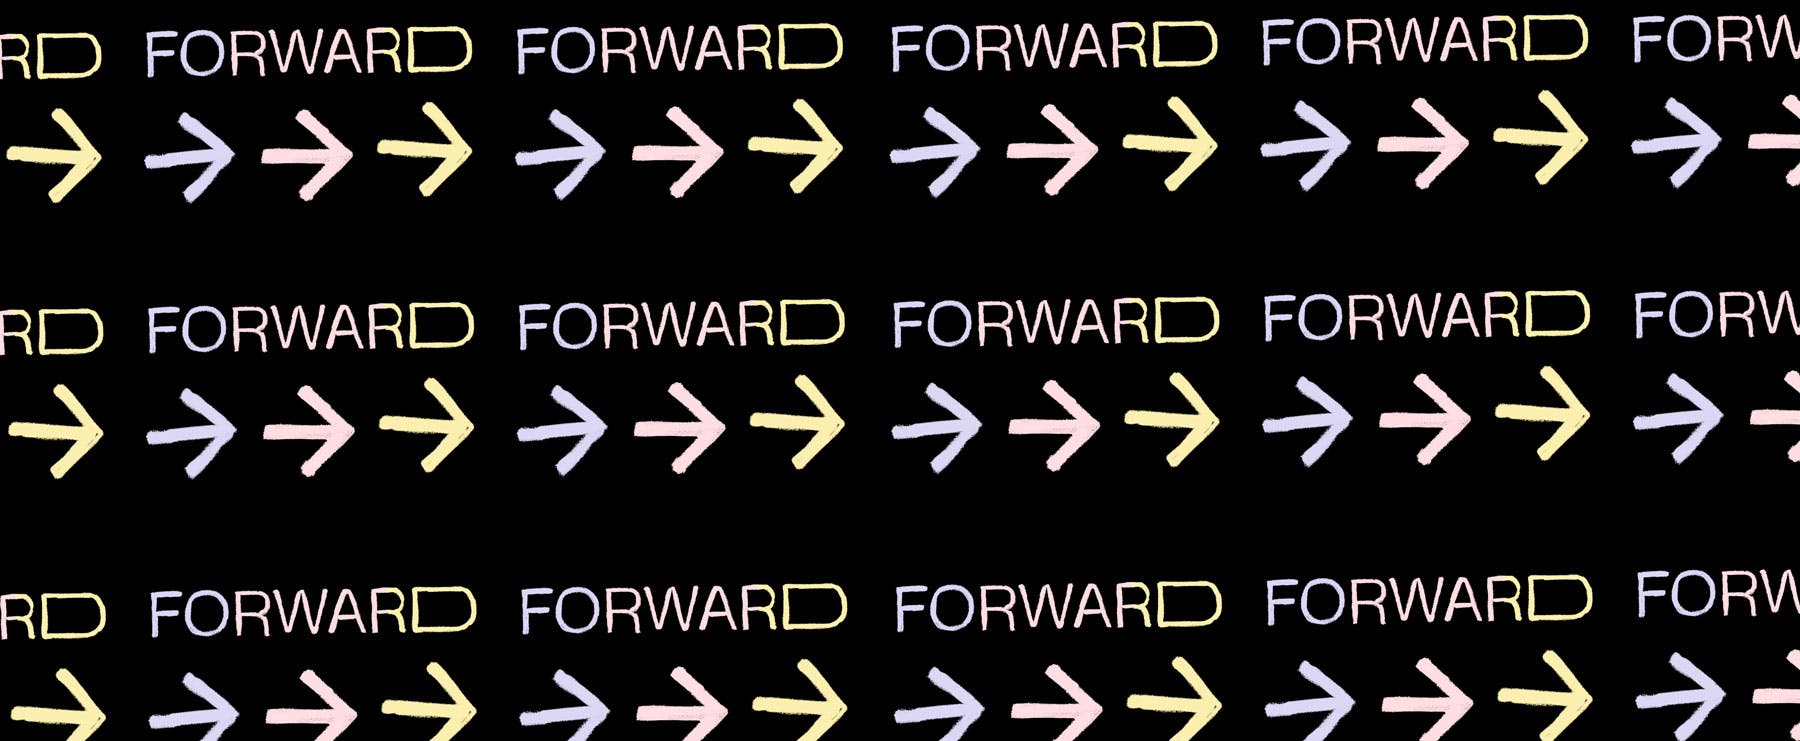 Forward, ett digitalt supermöte anordnat av Pleo